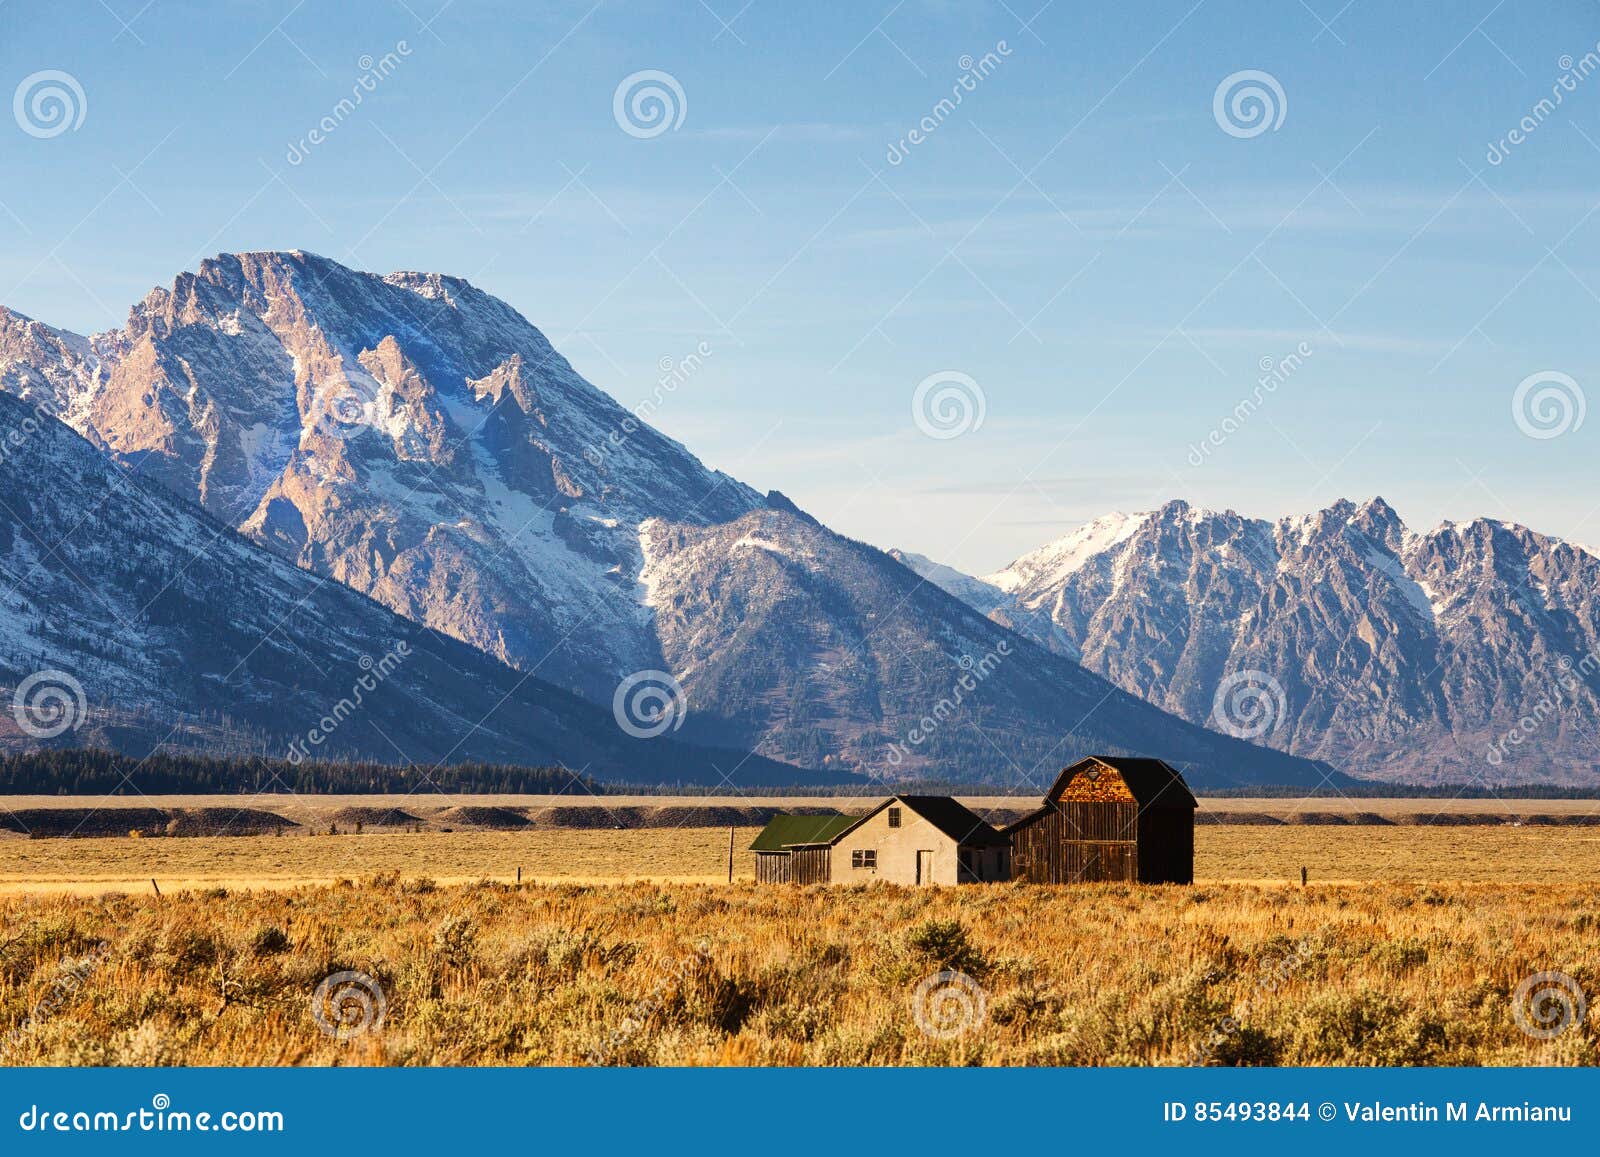 barn in the grand teton national park, wyoming